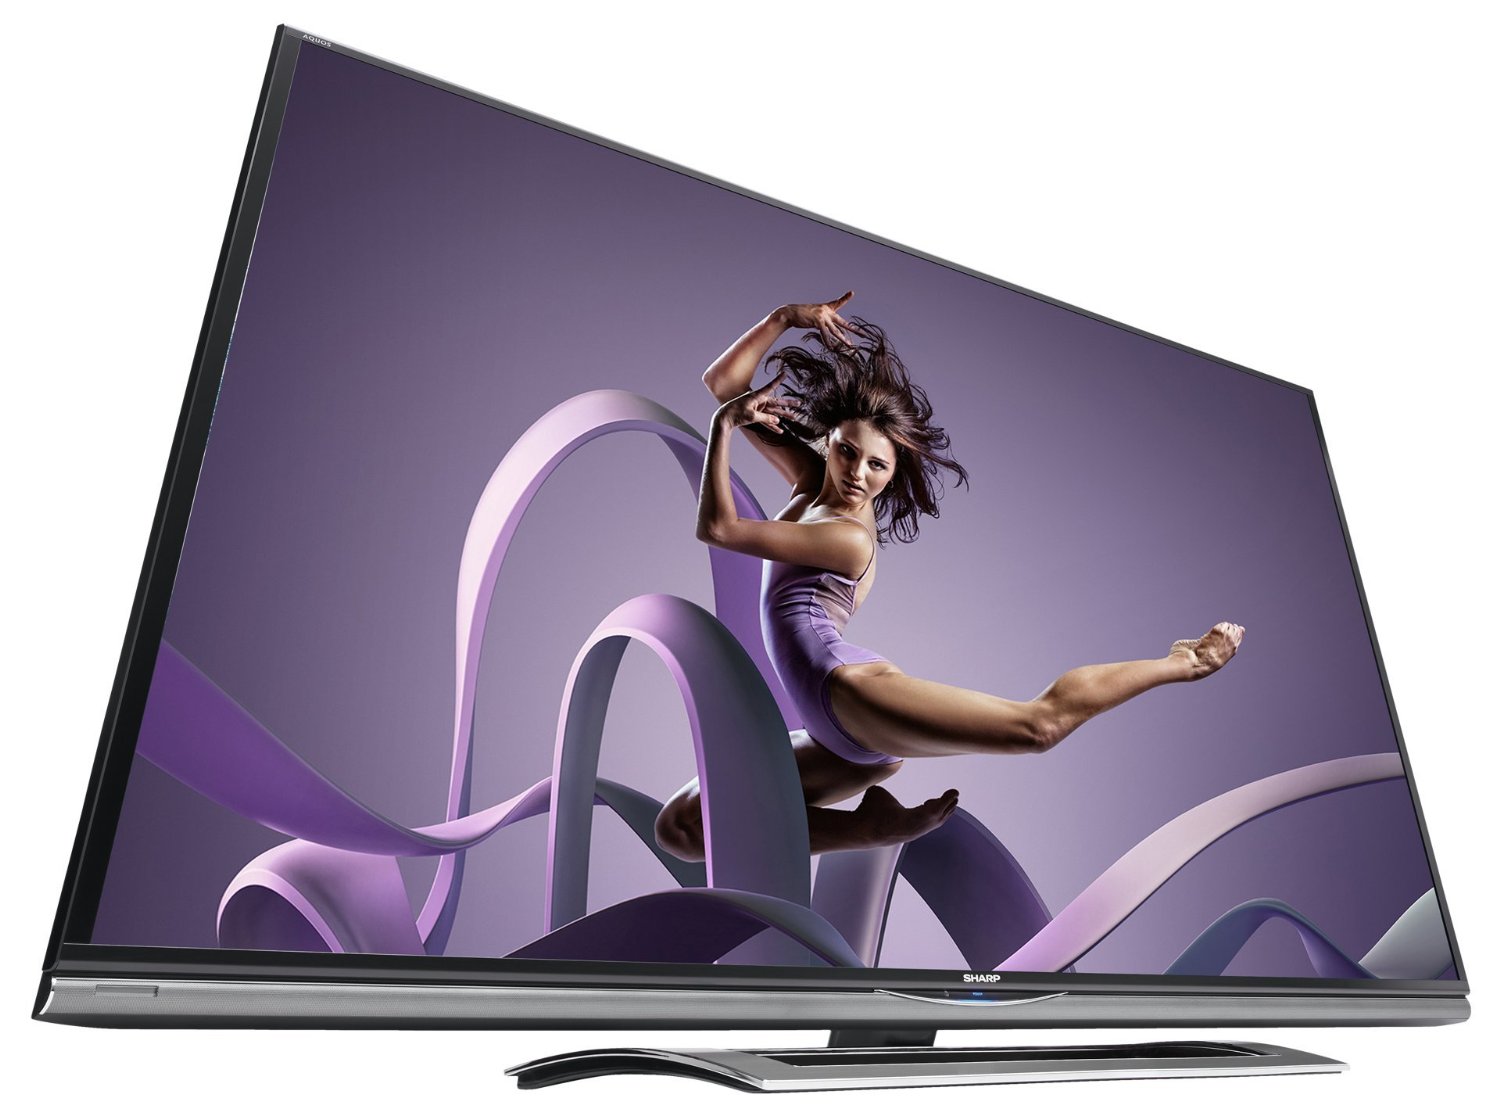 Sharp 70-inch Aquos 4K Ultra HD LED TV